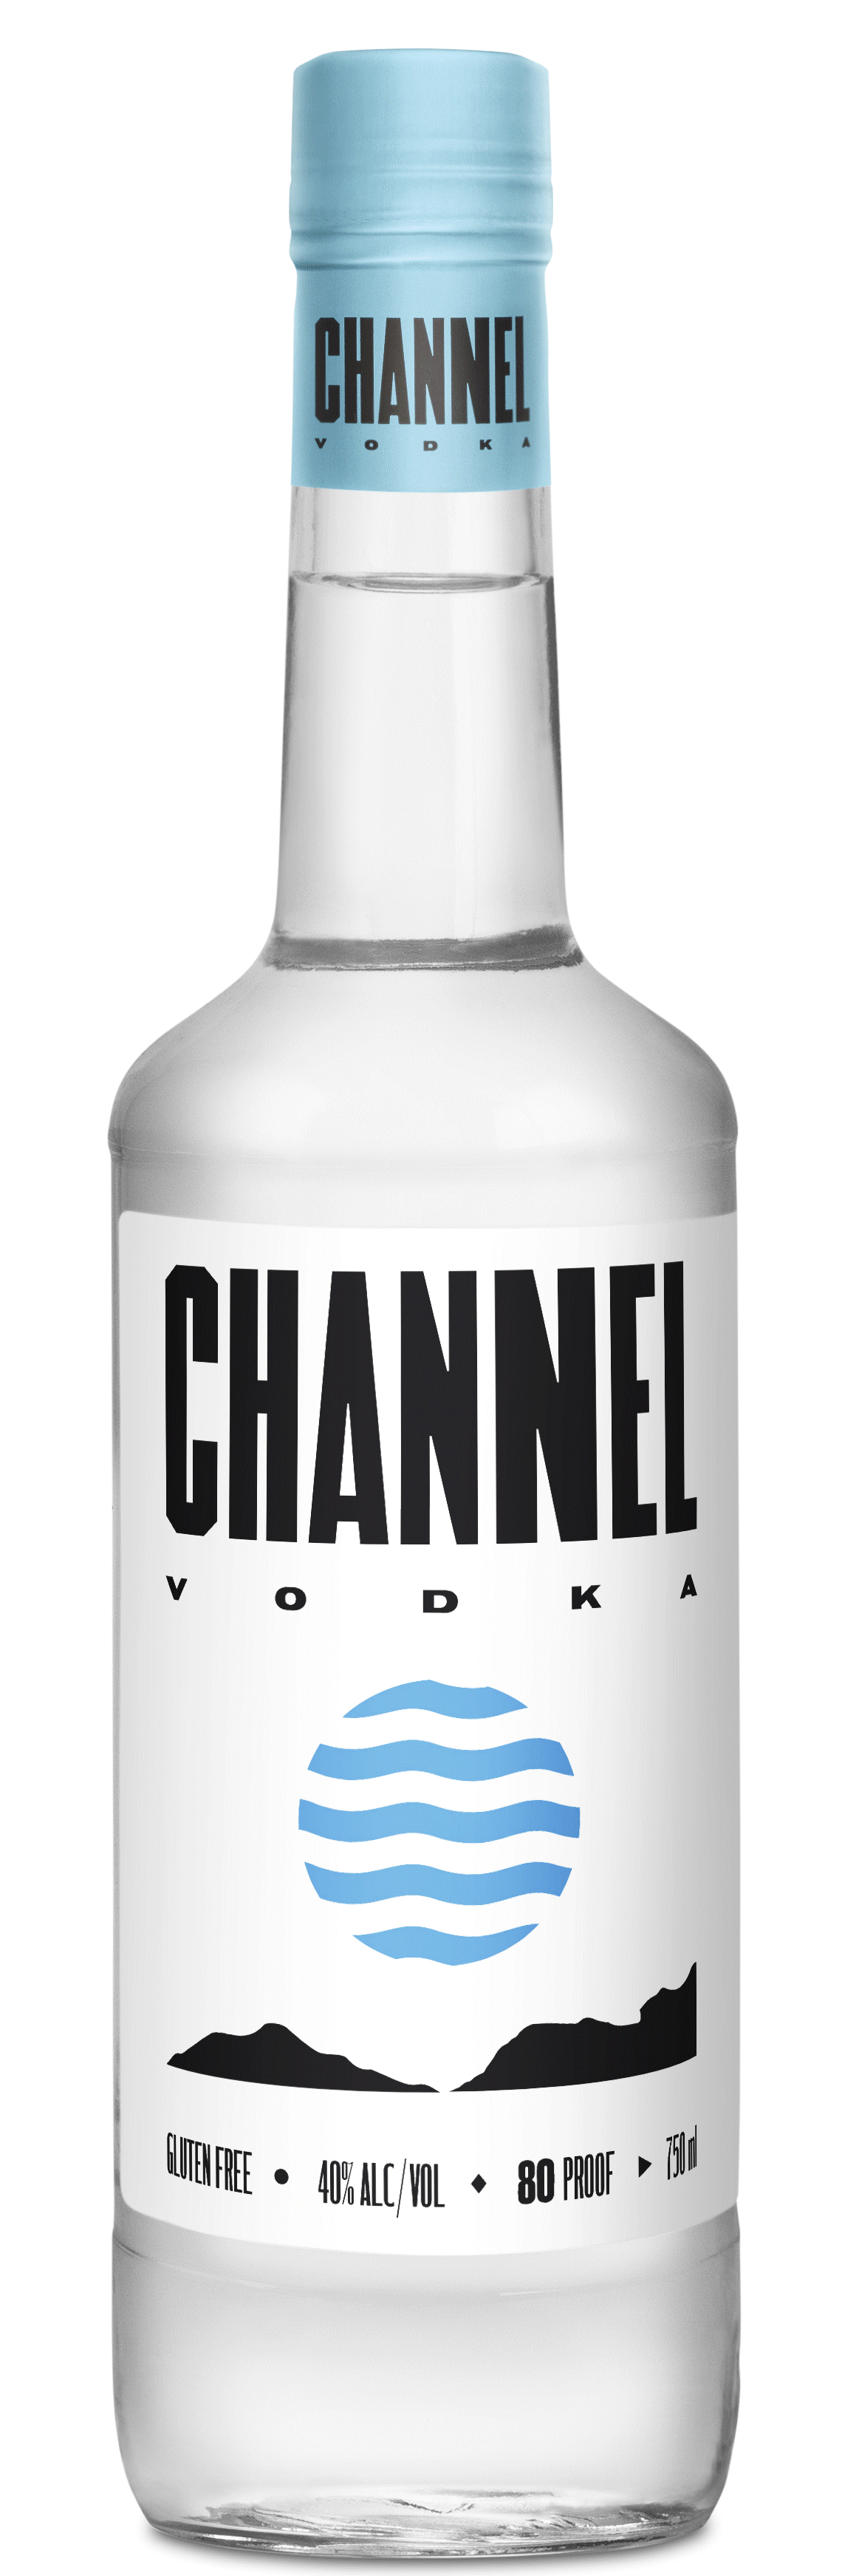 Channel Vodka